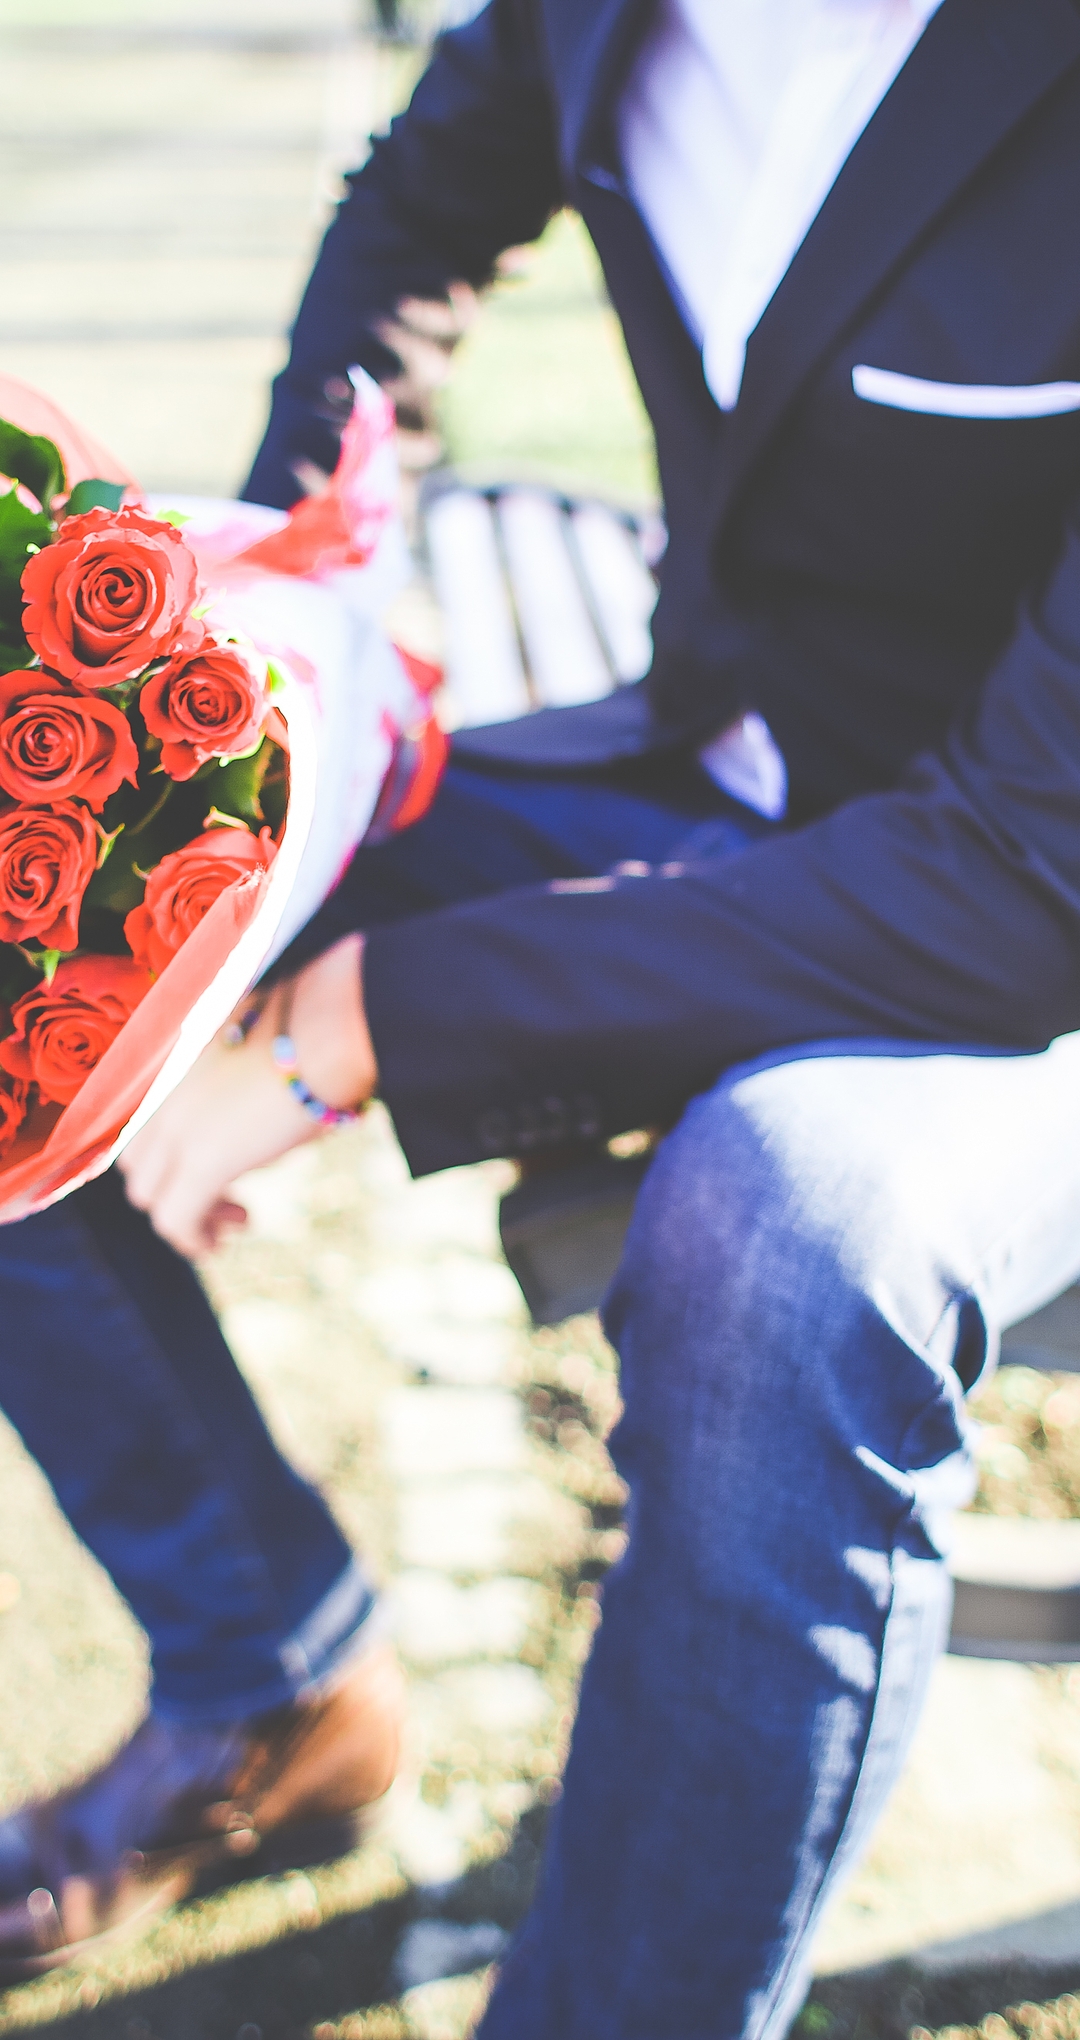 Картинка: Мужчина, костюм, розы, цветы, букет, романтика, скамейка, тень